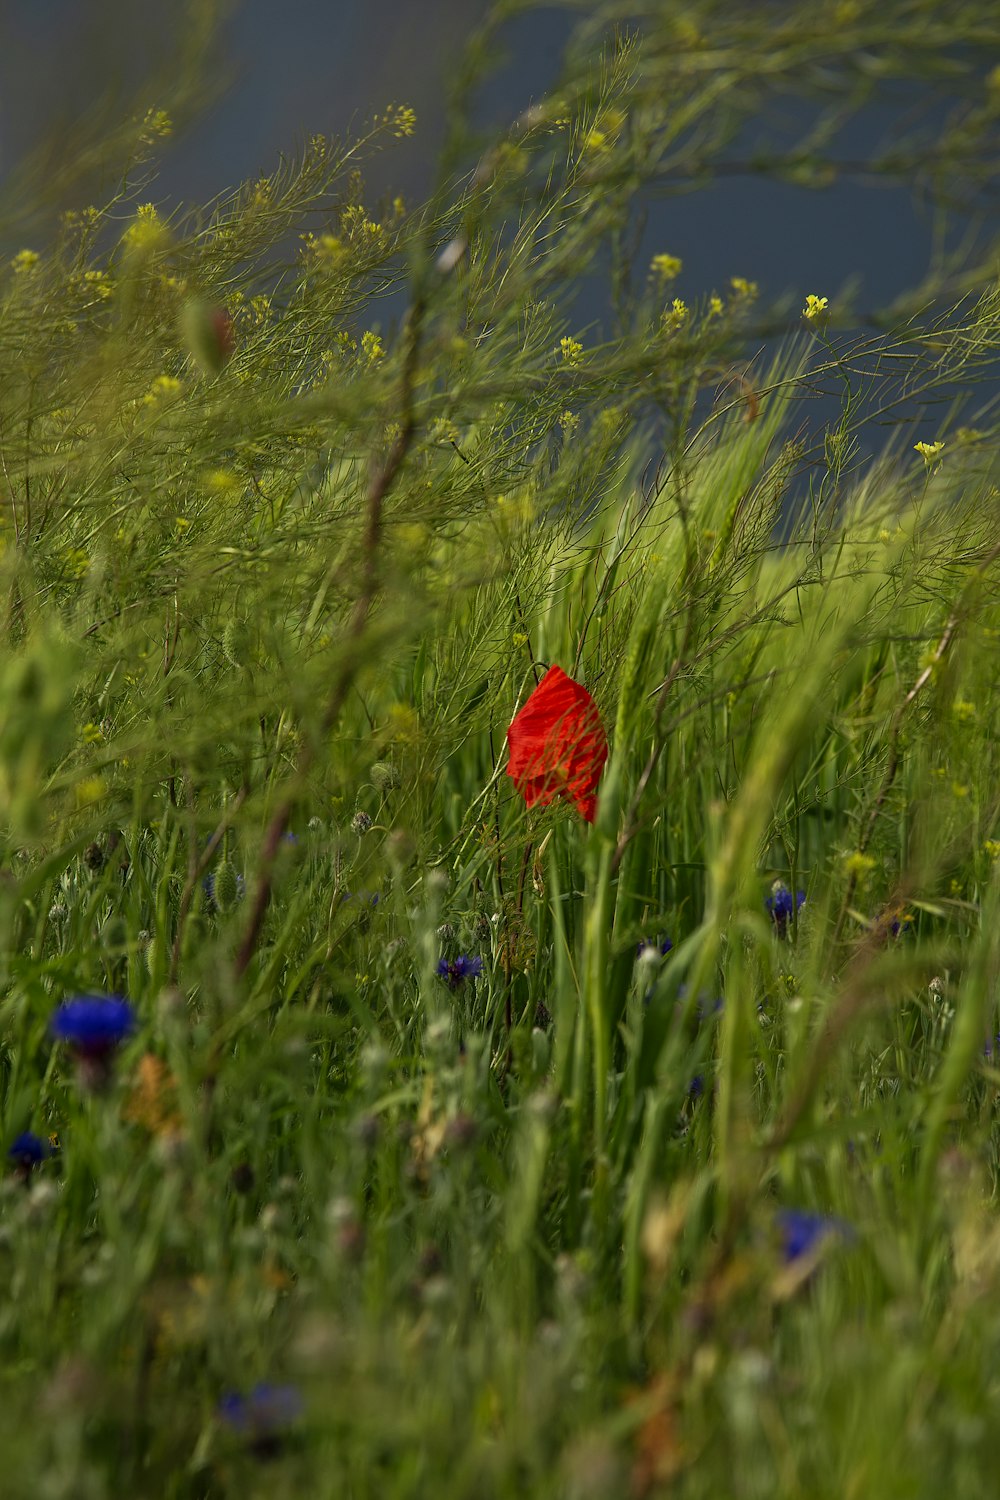 a single red flower in a grassy field